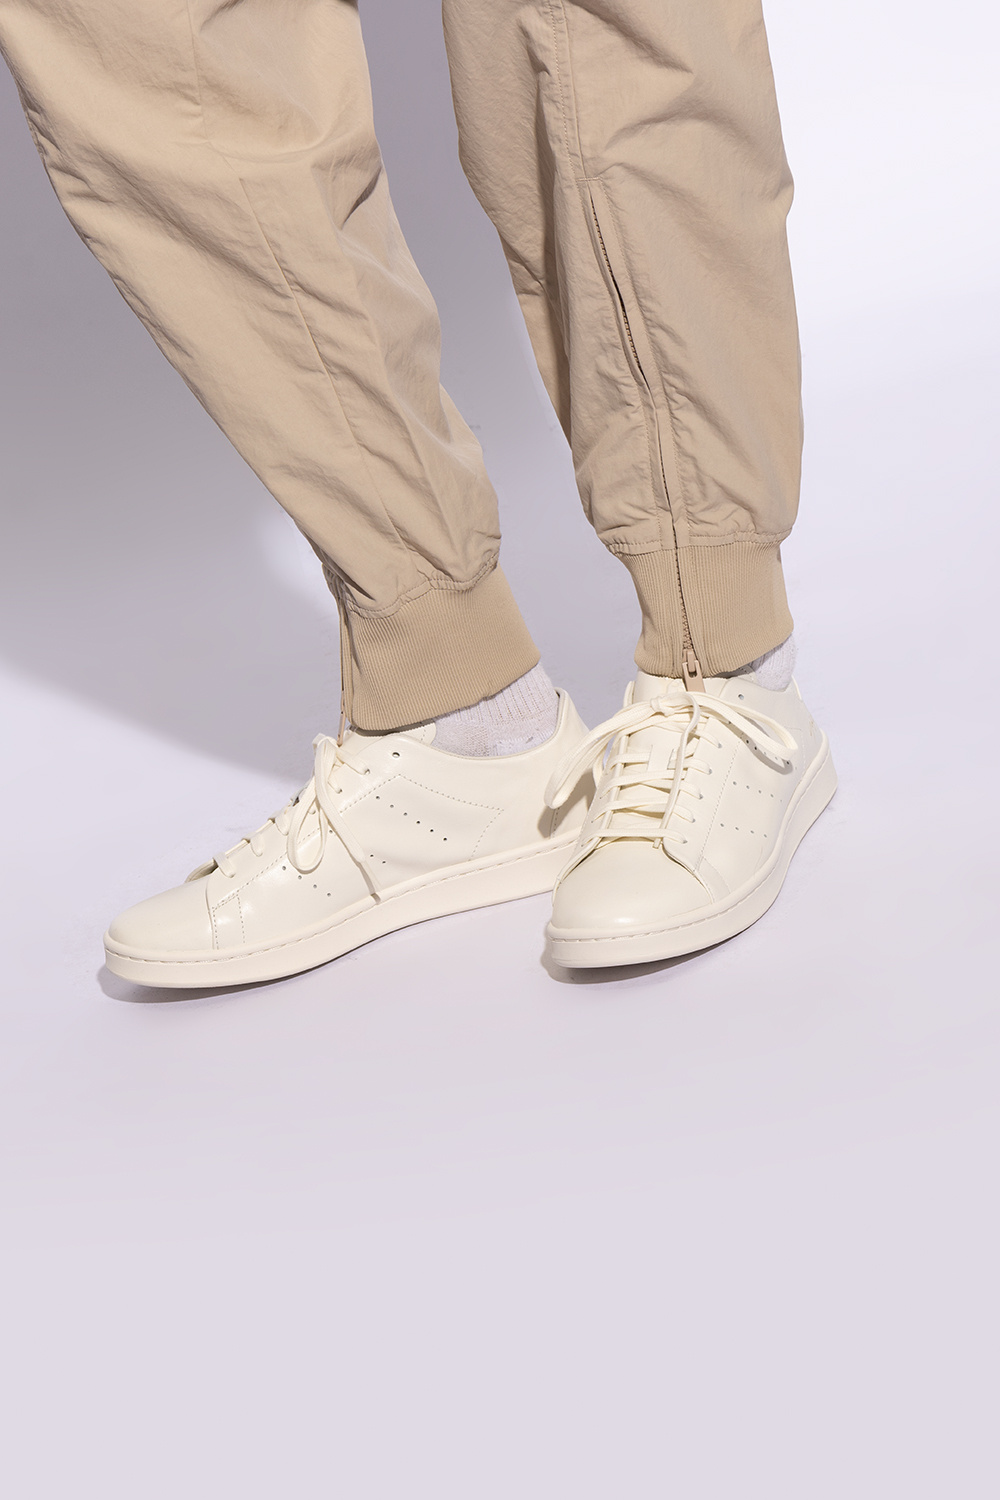 White 'Stan Smith' sneakers Y-3 Yohji Yamamoto - Vitkac Canada